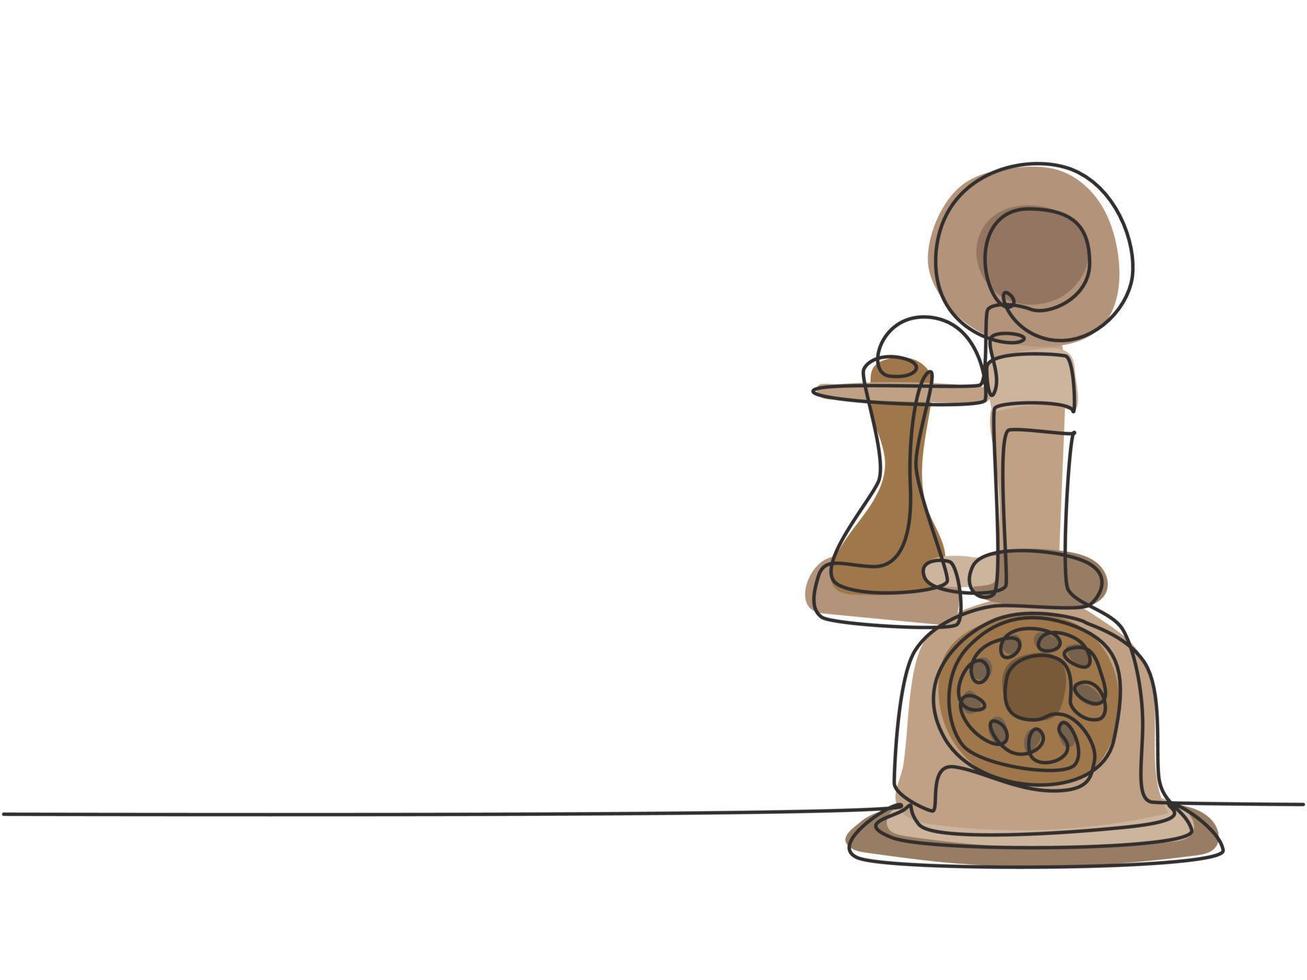 un dibujo de línea continua de un teléfono de pared analógico antiguo para comunicarse. Ilustración de vector de diseño gráfico de dibujo de línea única concepto de dispositivo de telecomunicaciones clásico retro